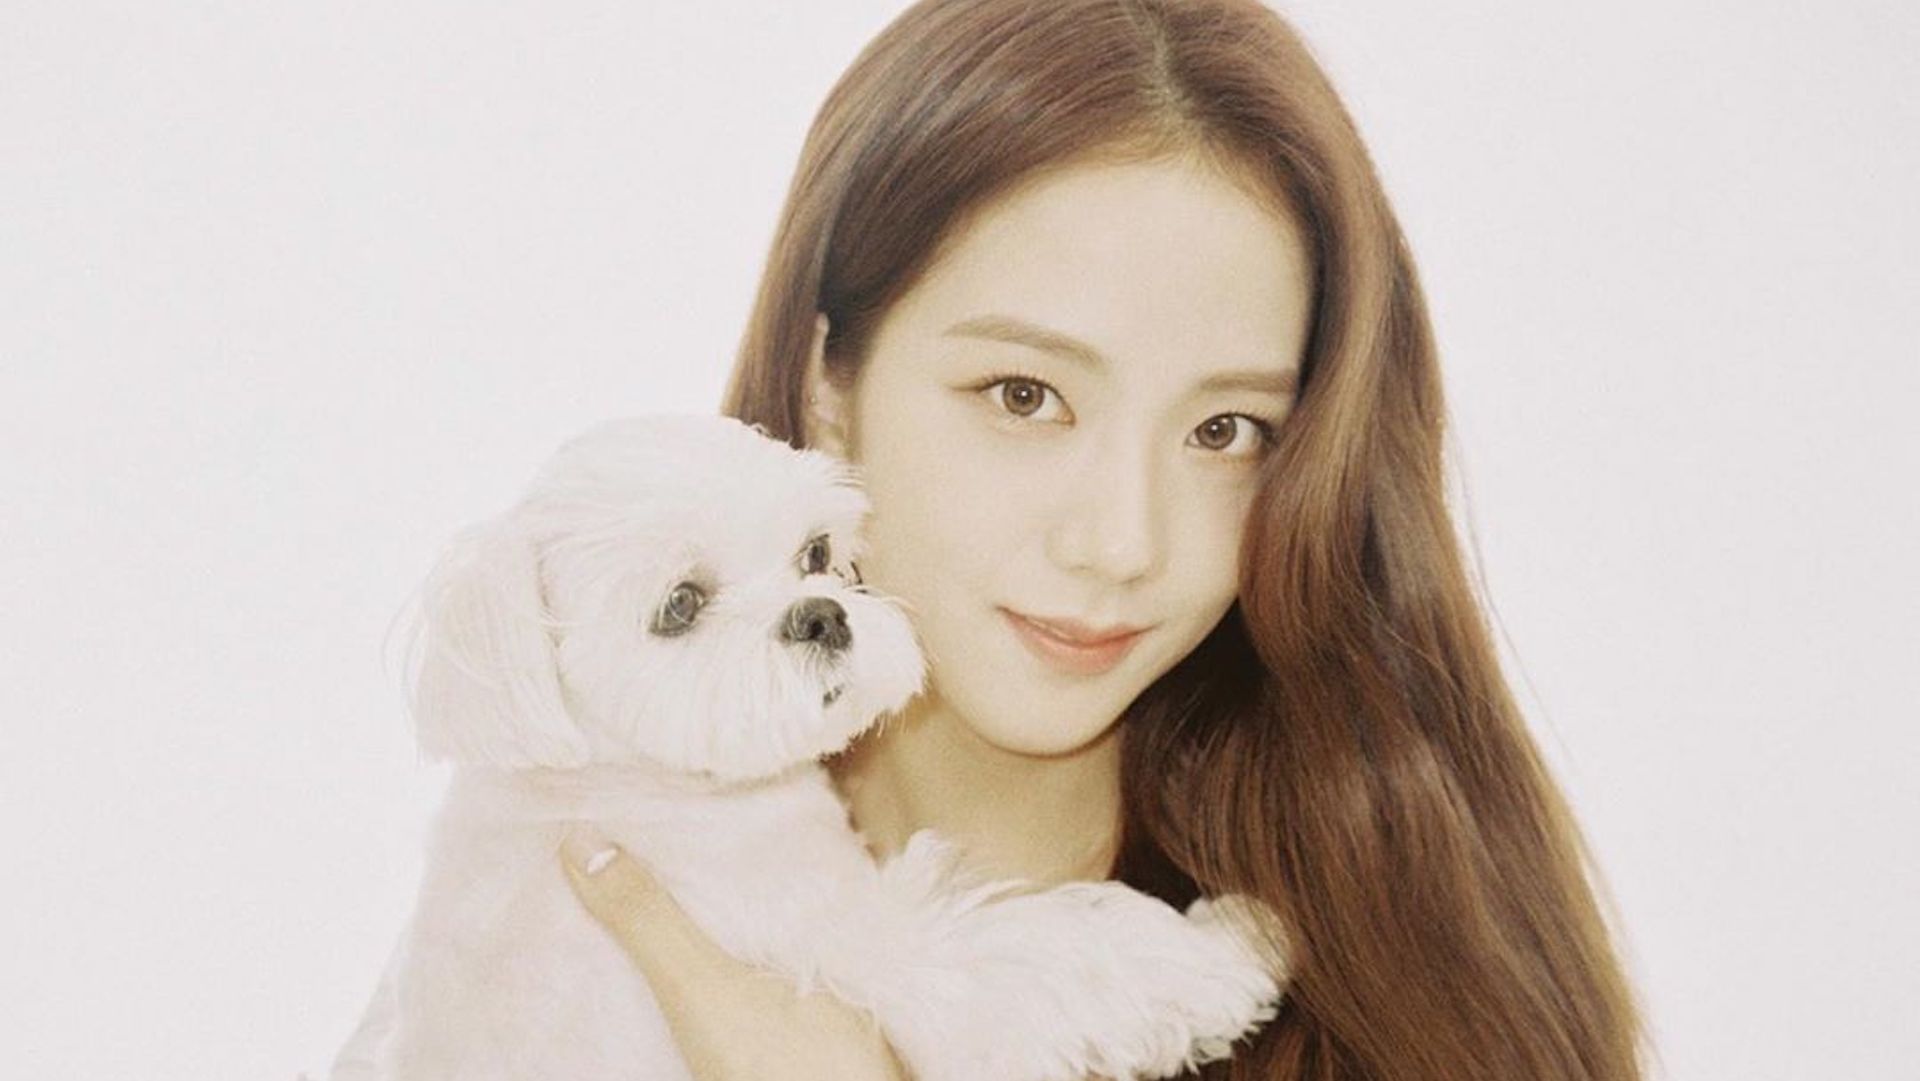 Jisoo and her pet dog